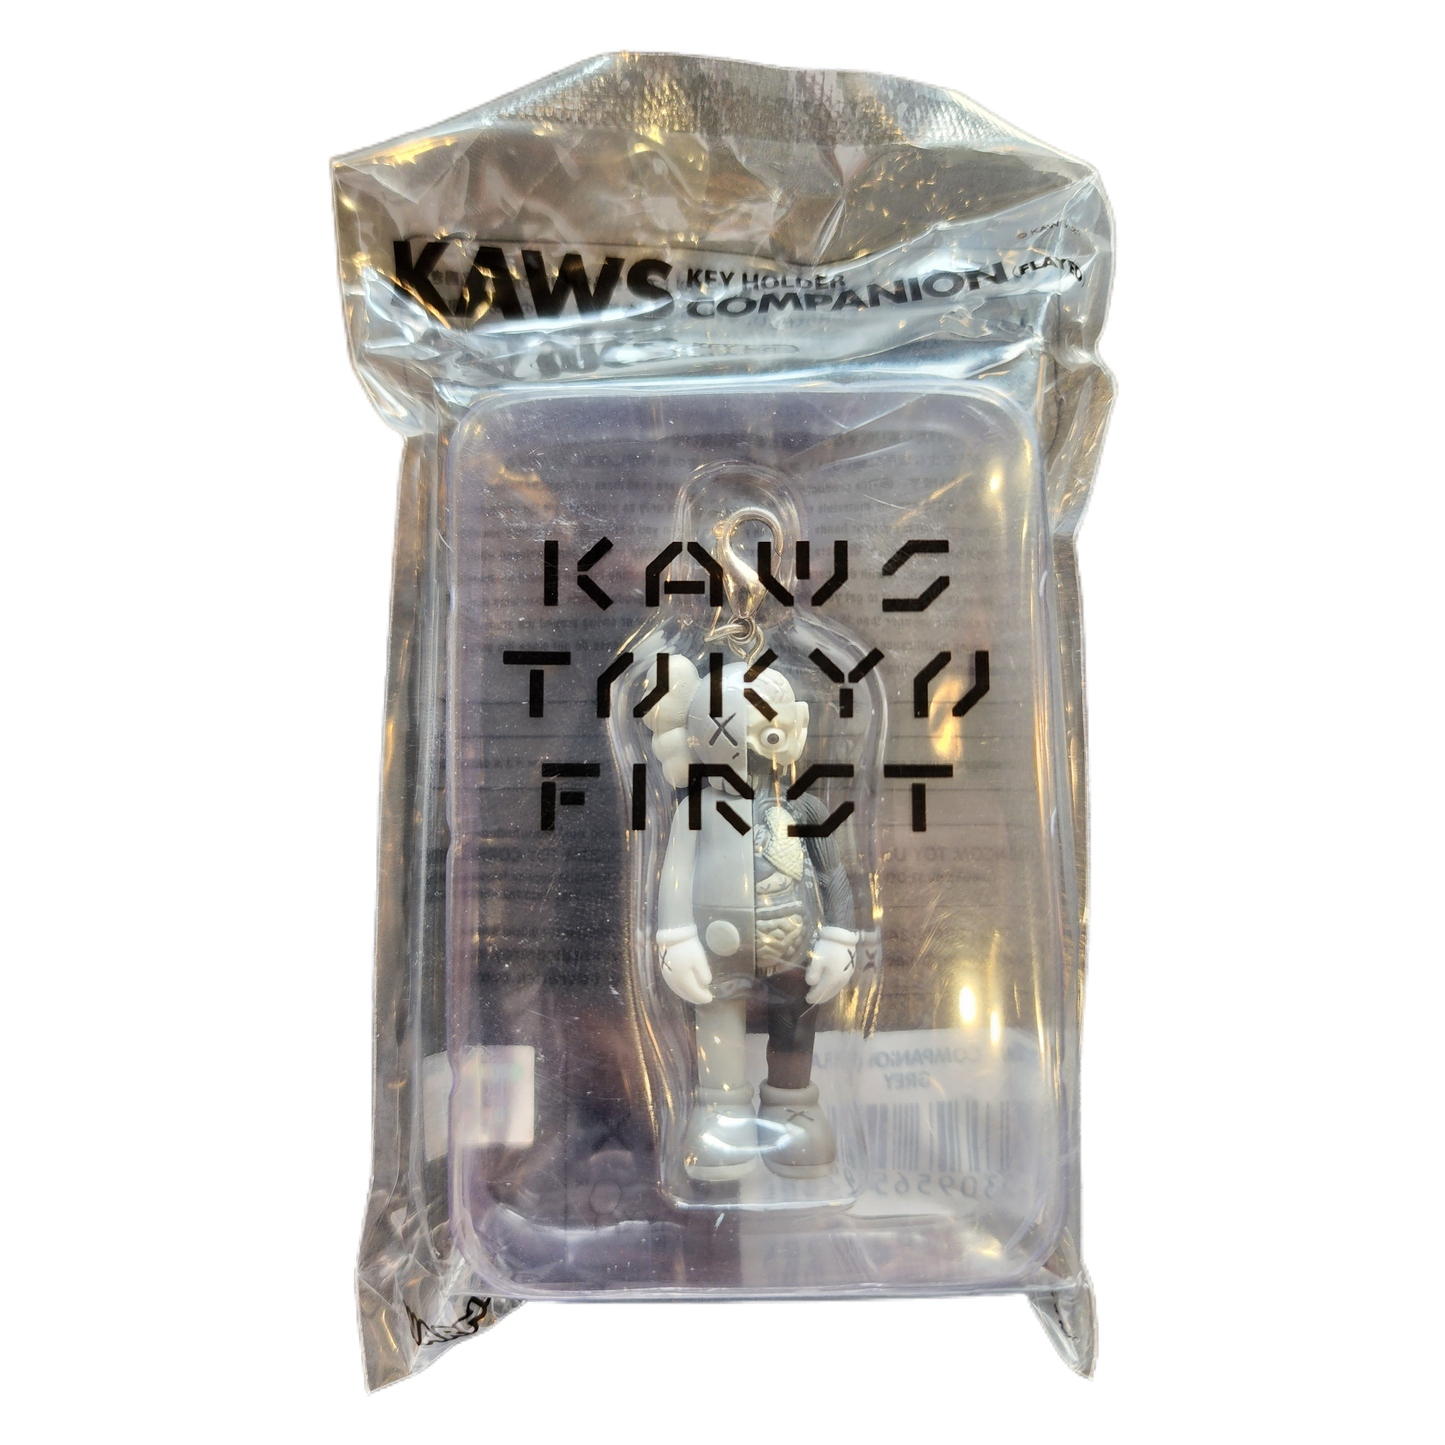 Kaws - "Tokyo First Flayed" - Keychain